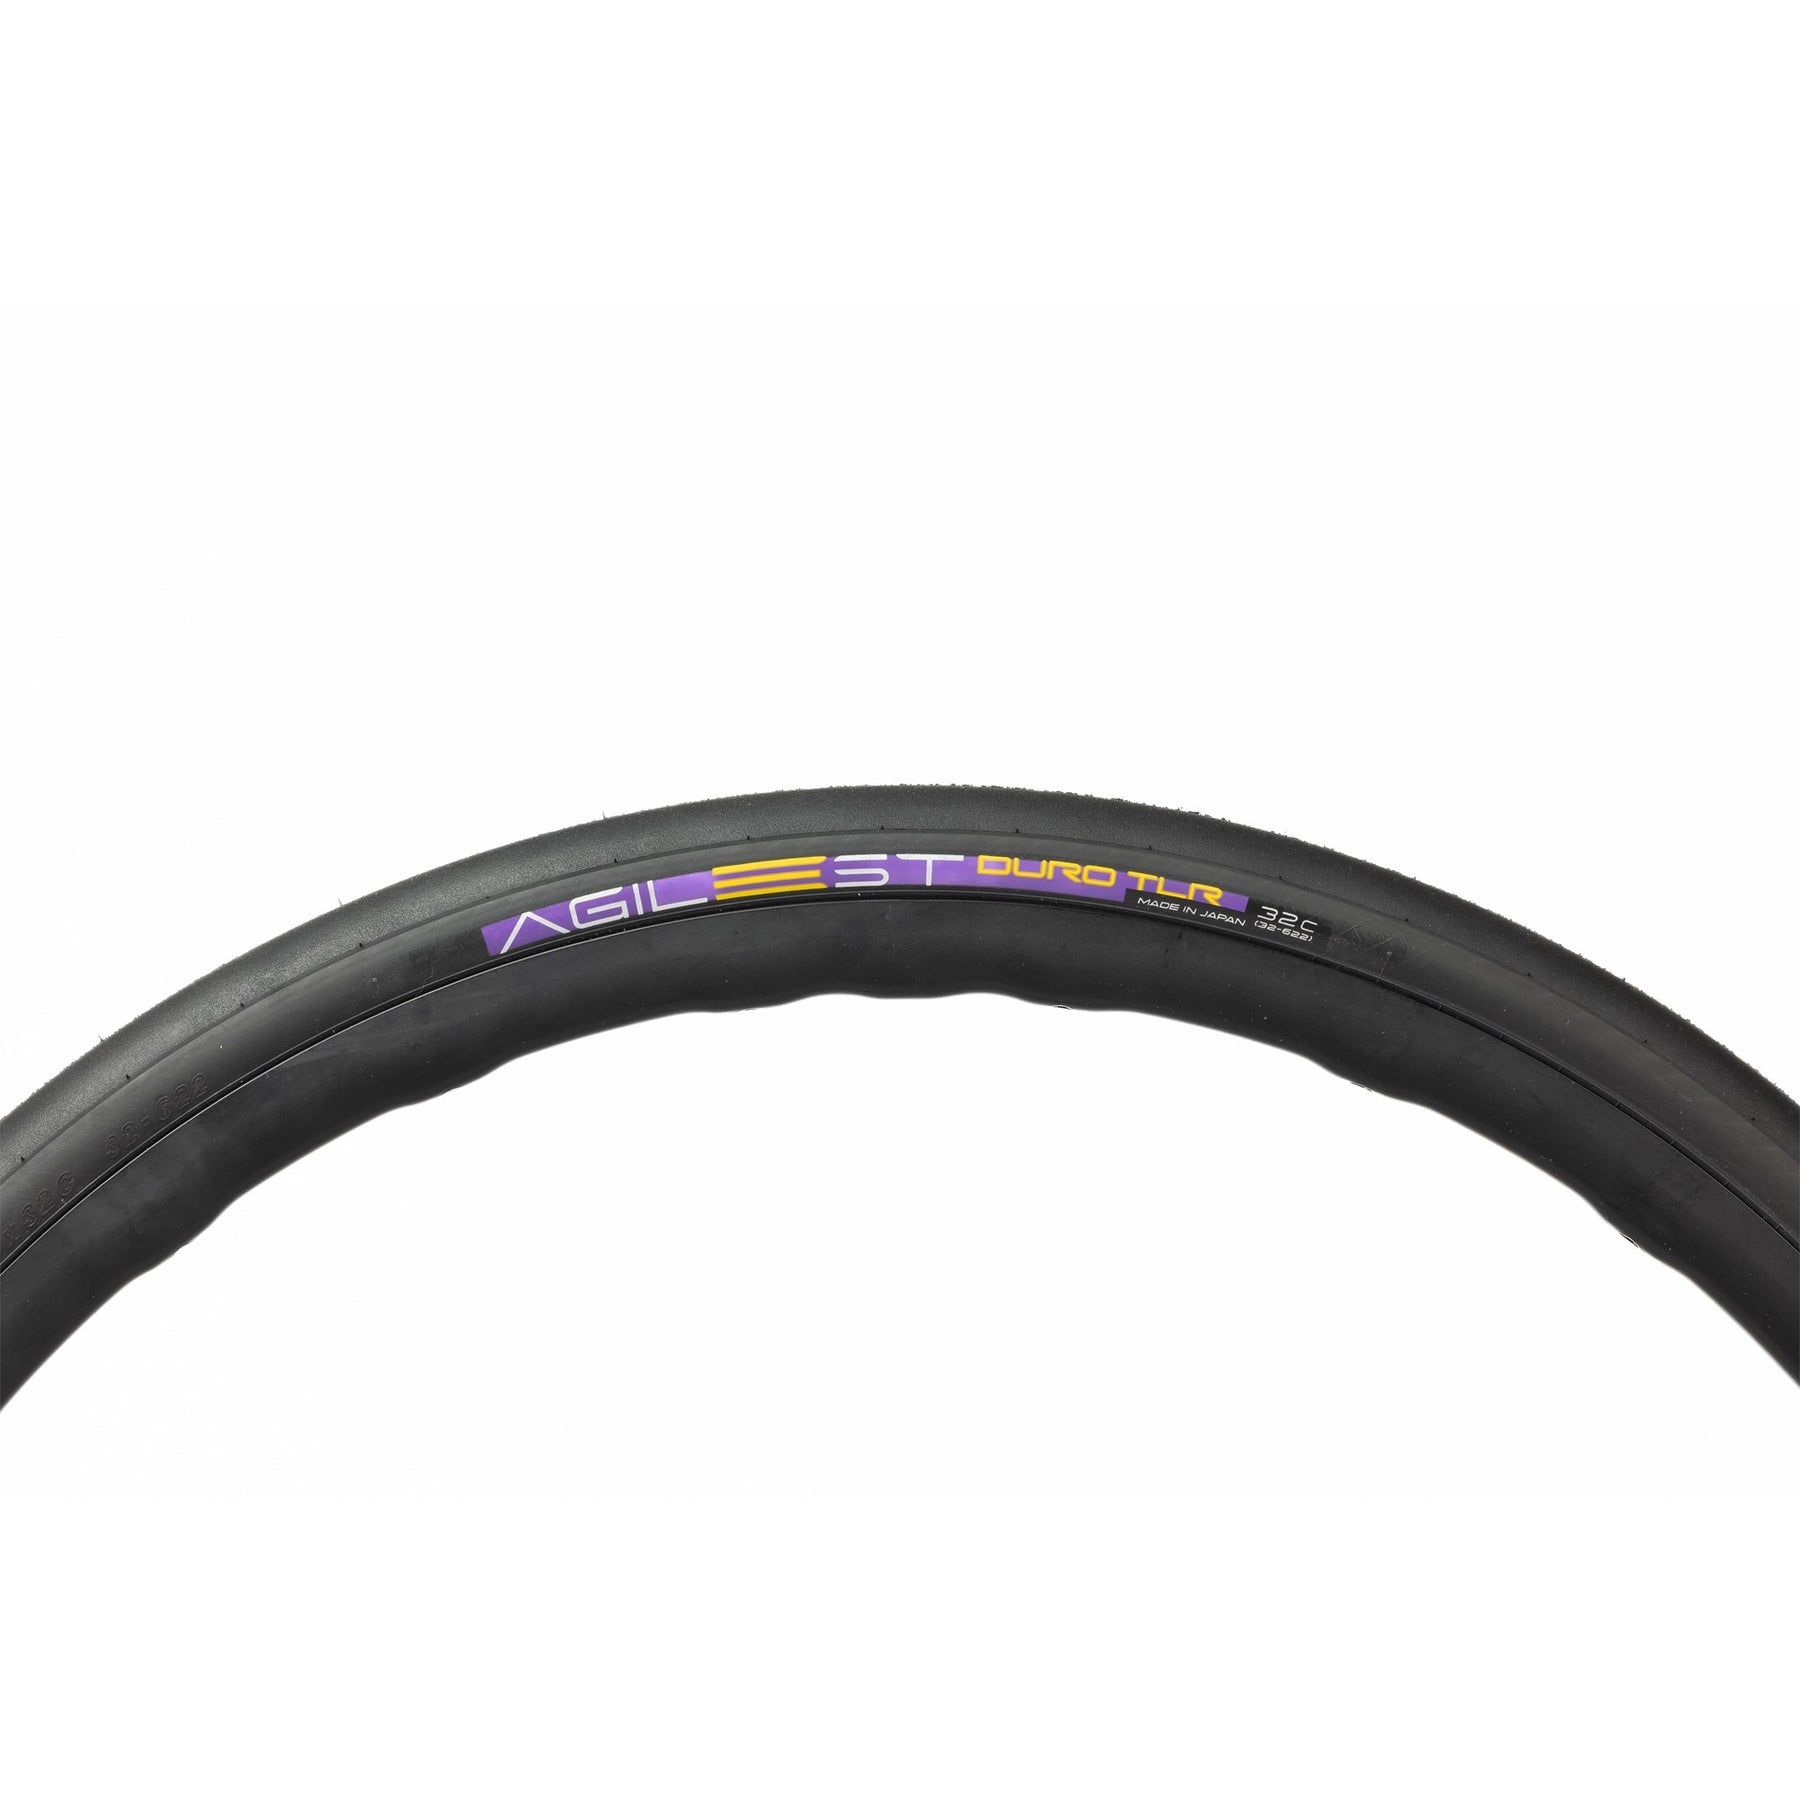 Panaracer Agilest Duro TLR Folding Road Tyre